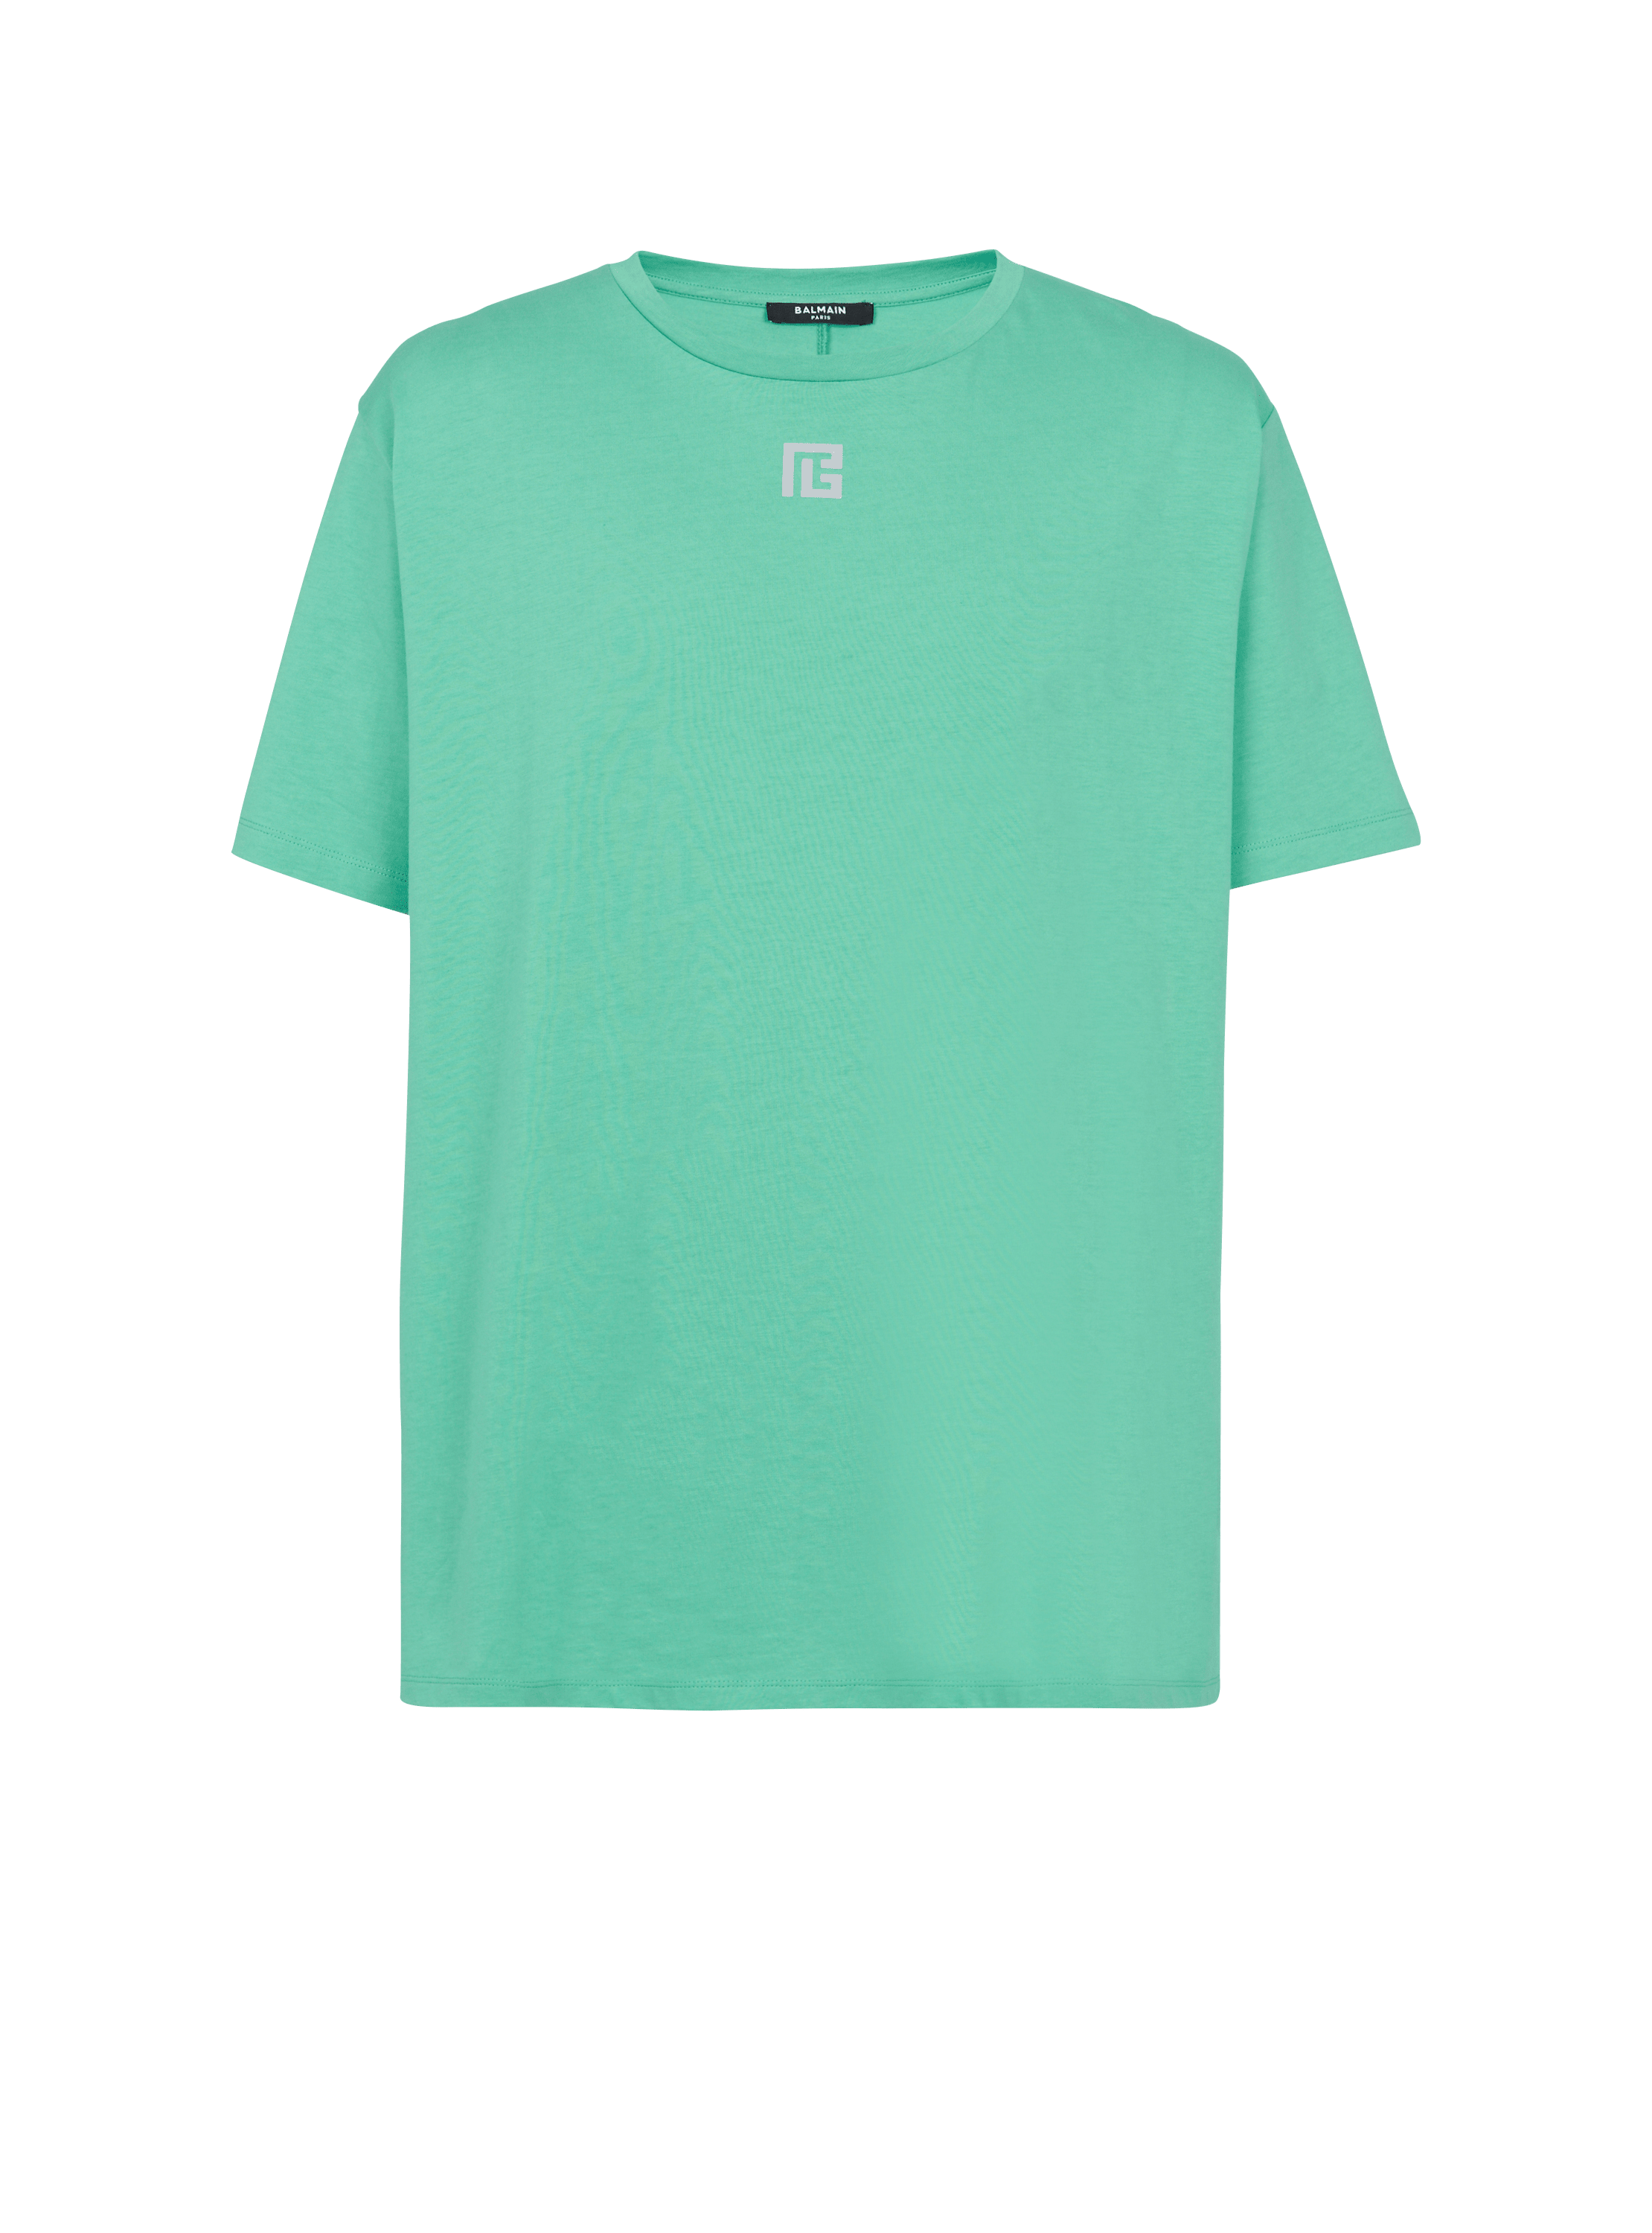 Oversized T-shirt in eco-responsible cotton with reflective Balmain maxi logo print